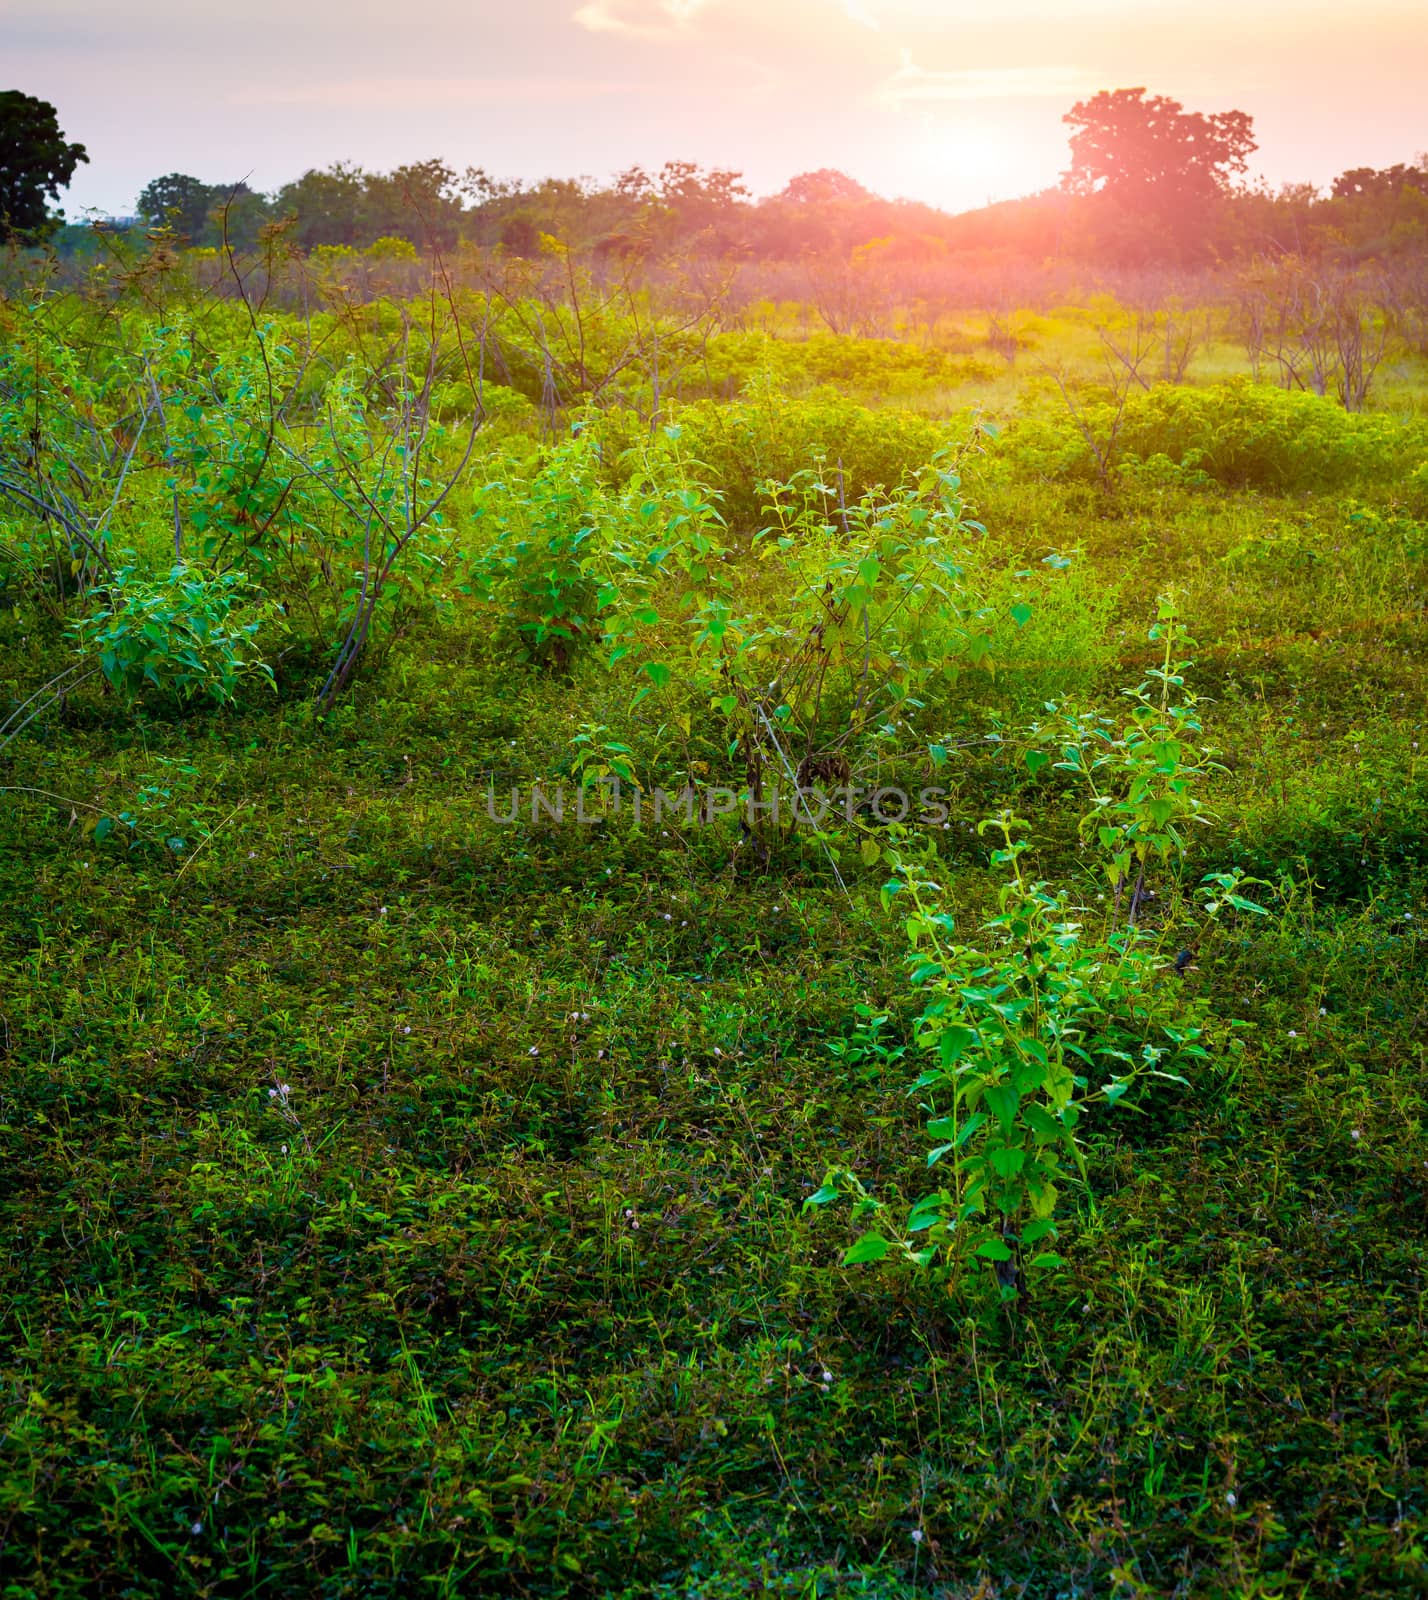 sunset in grass field by moggara12